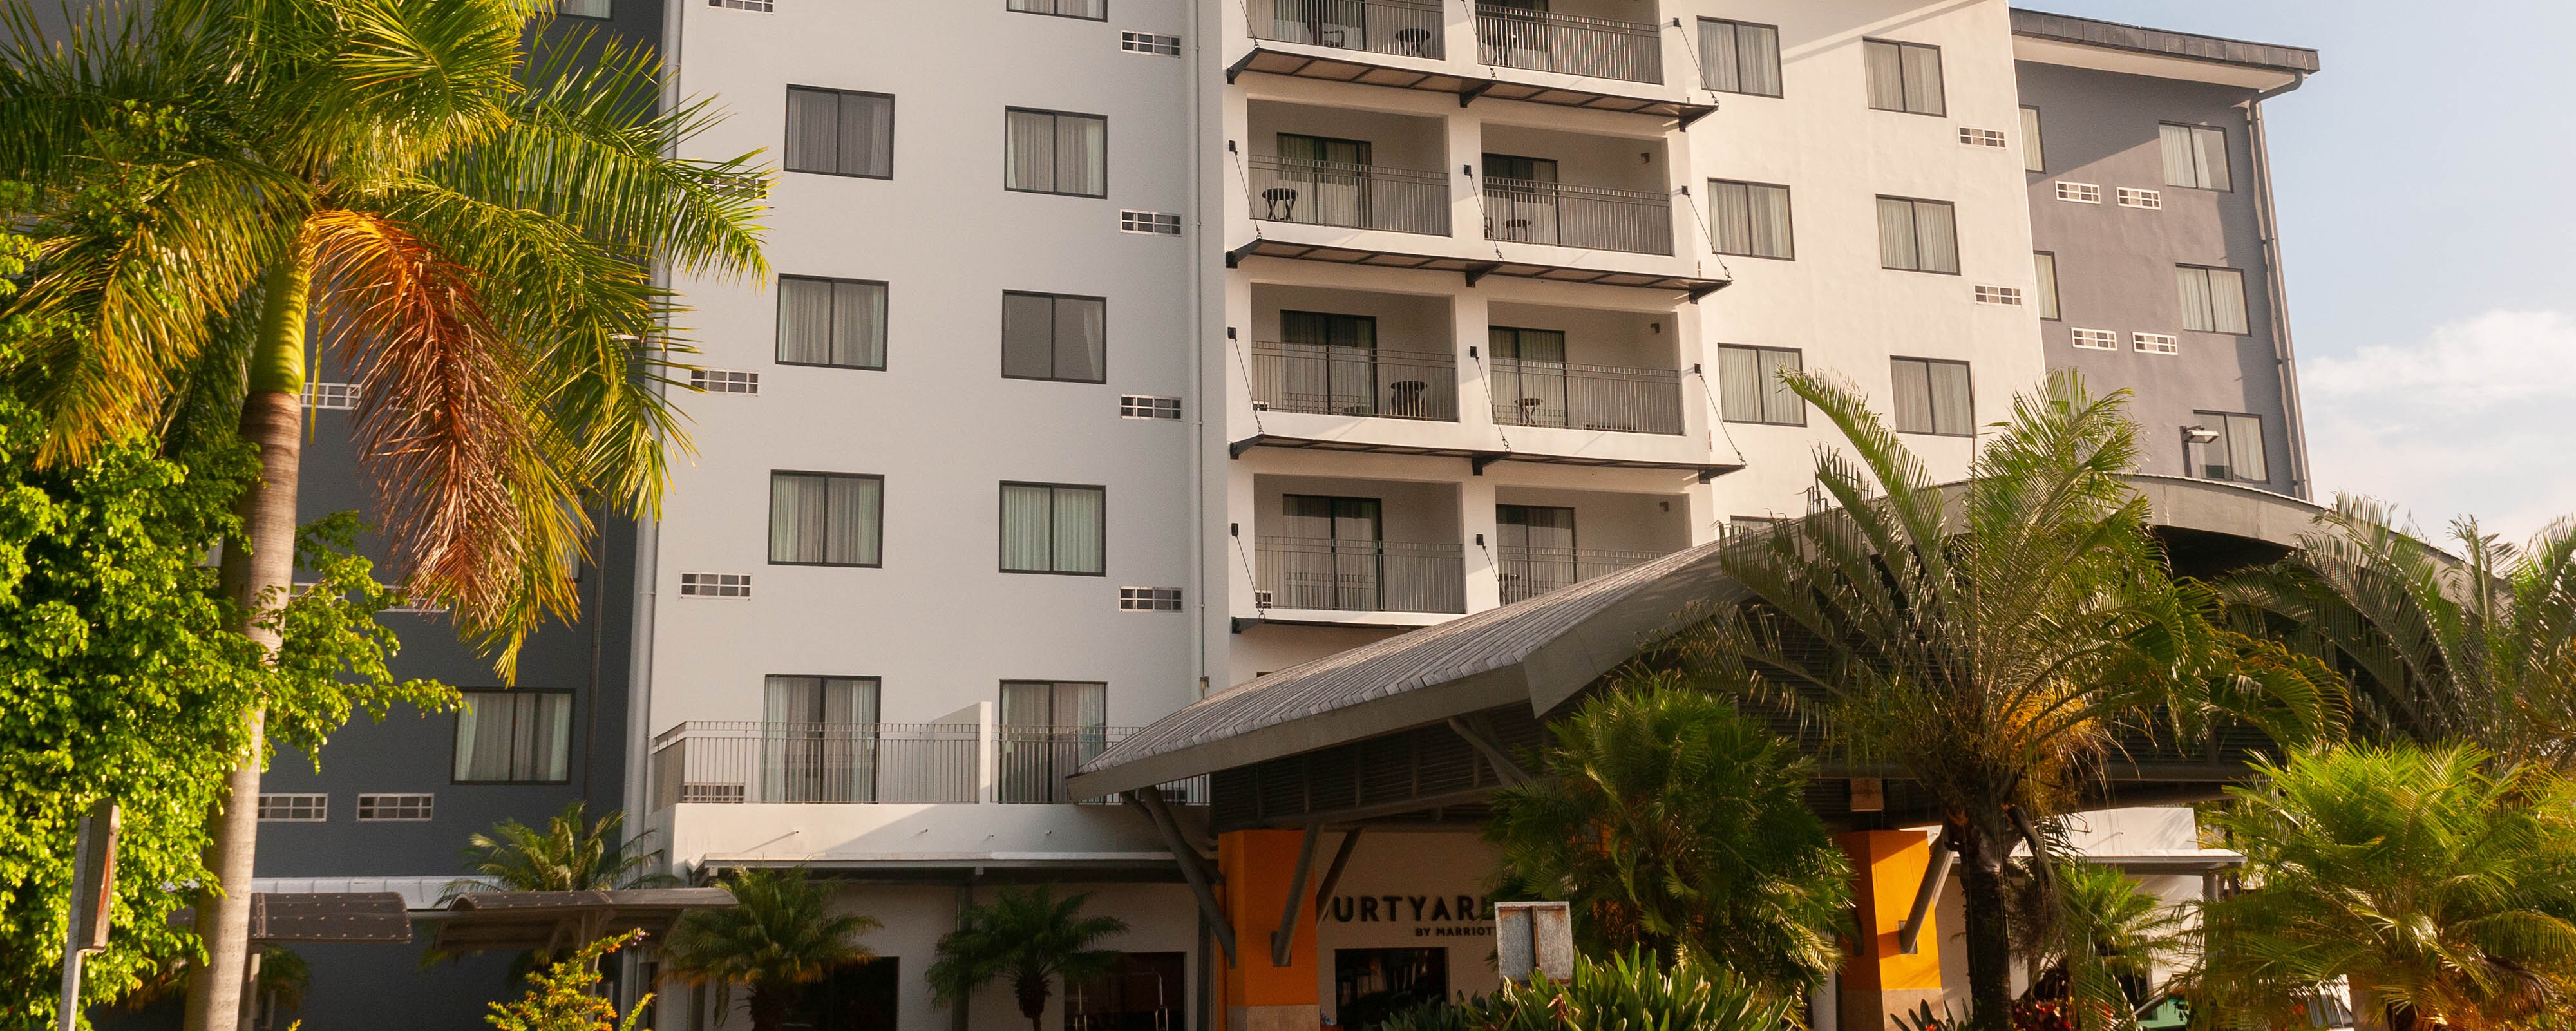 Image for Courtyard San Salvador, a Marriott hotel.